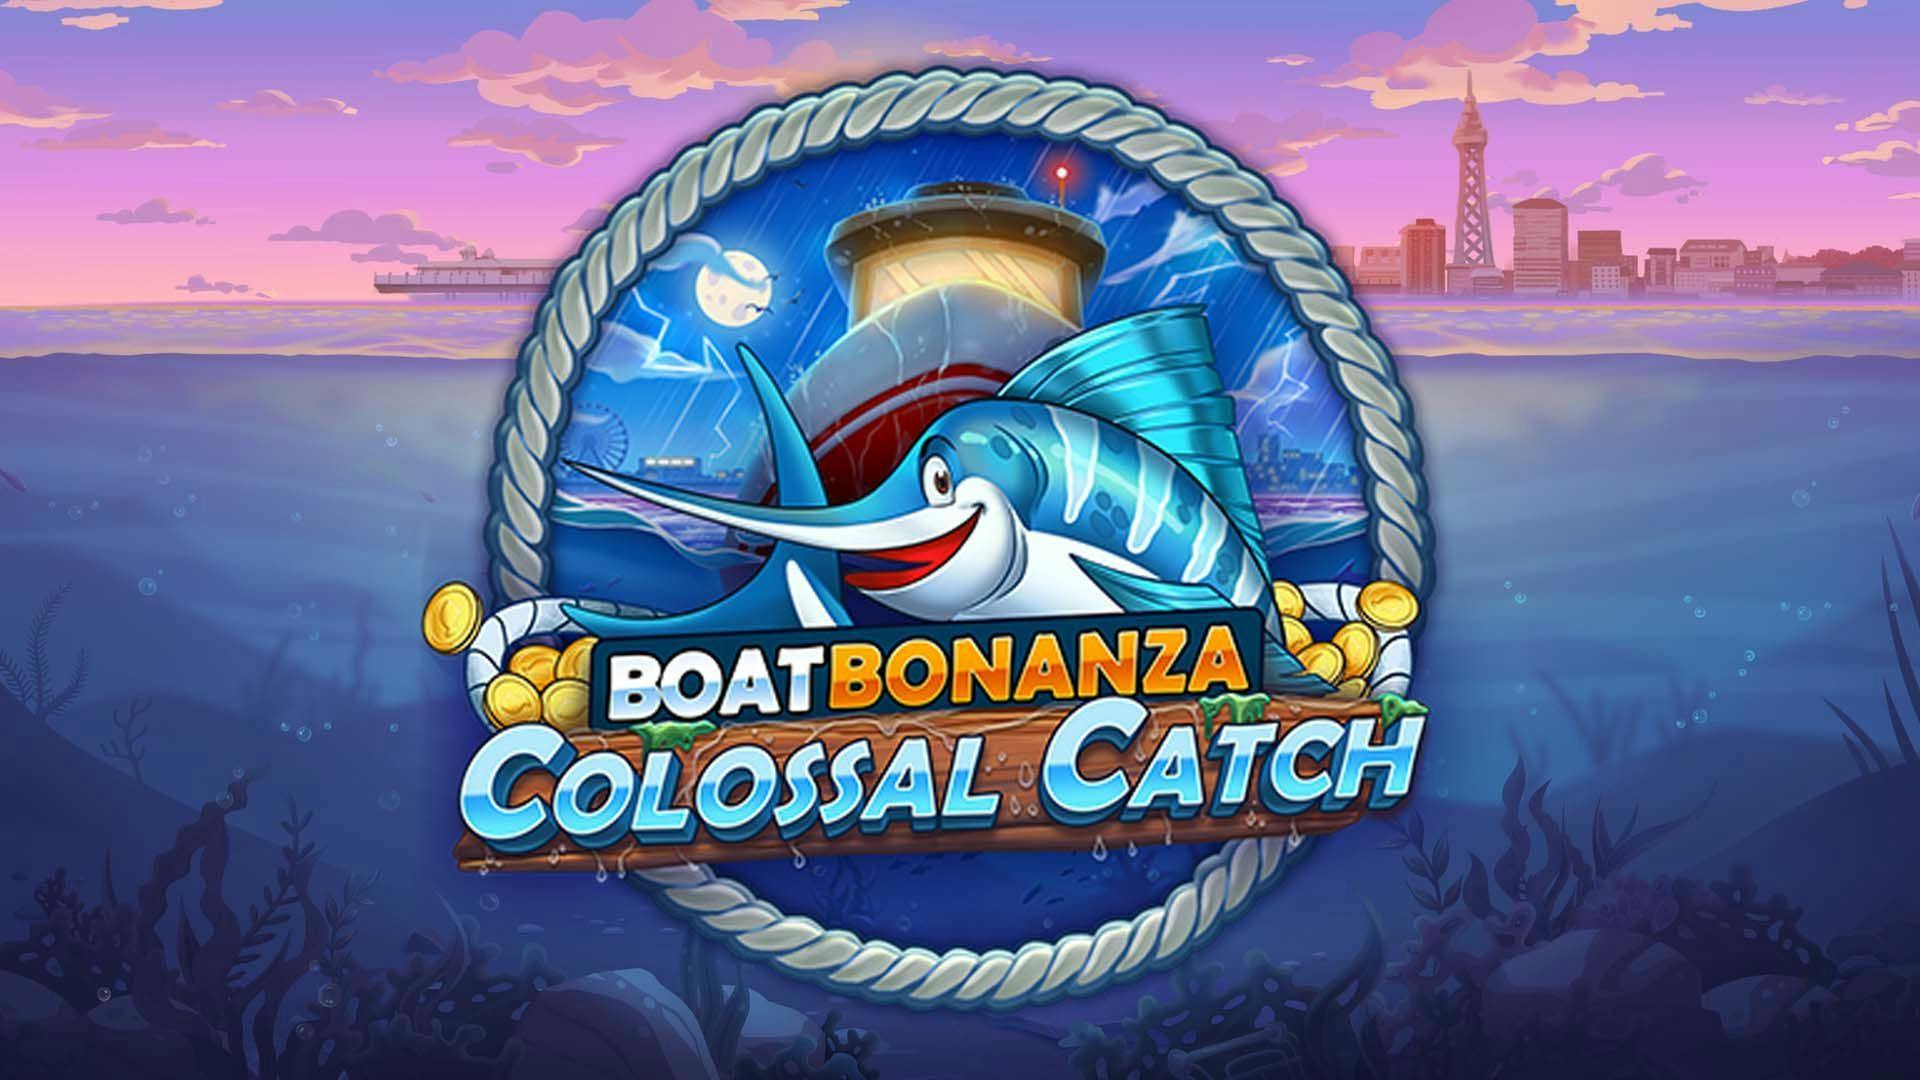 Boat Bonanza Colossal Catch Slot Machine Online Free Game Play